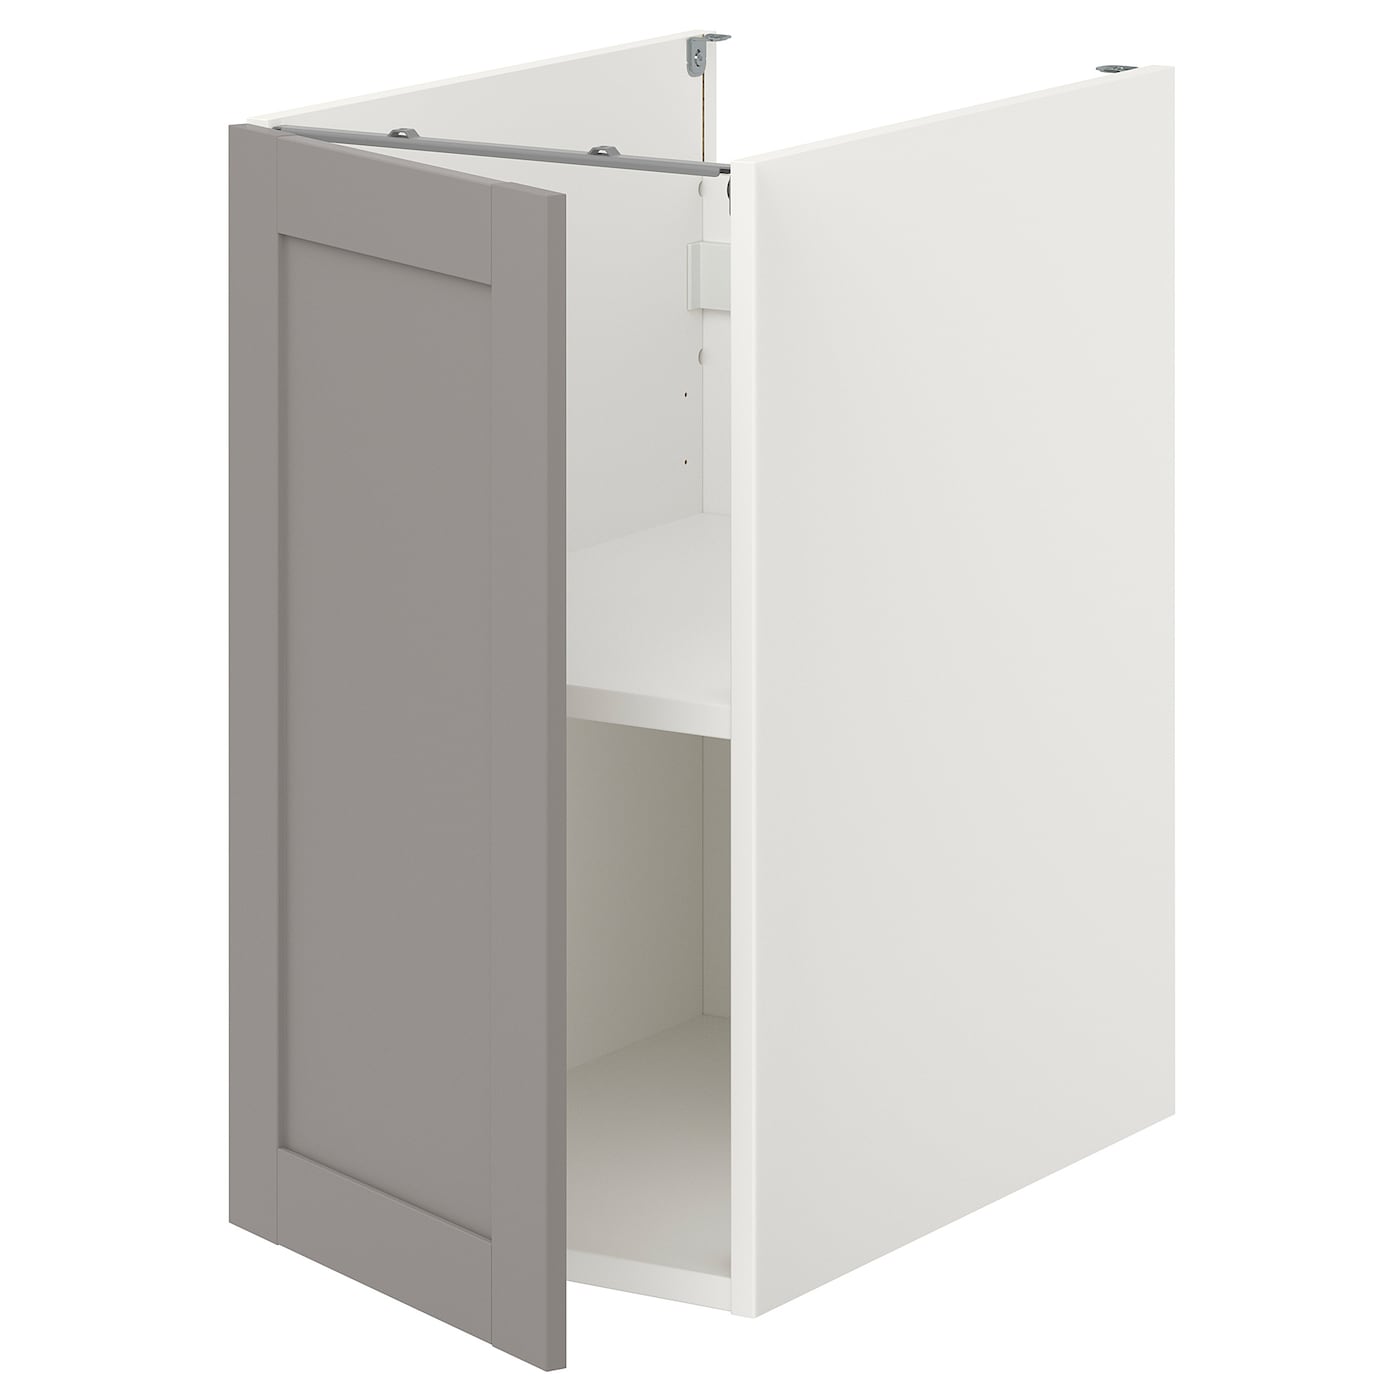 Шкаф с дверцами - IKEA ENHET, 75x62x40см, серый, ЭНХЕТ ИКЕА